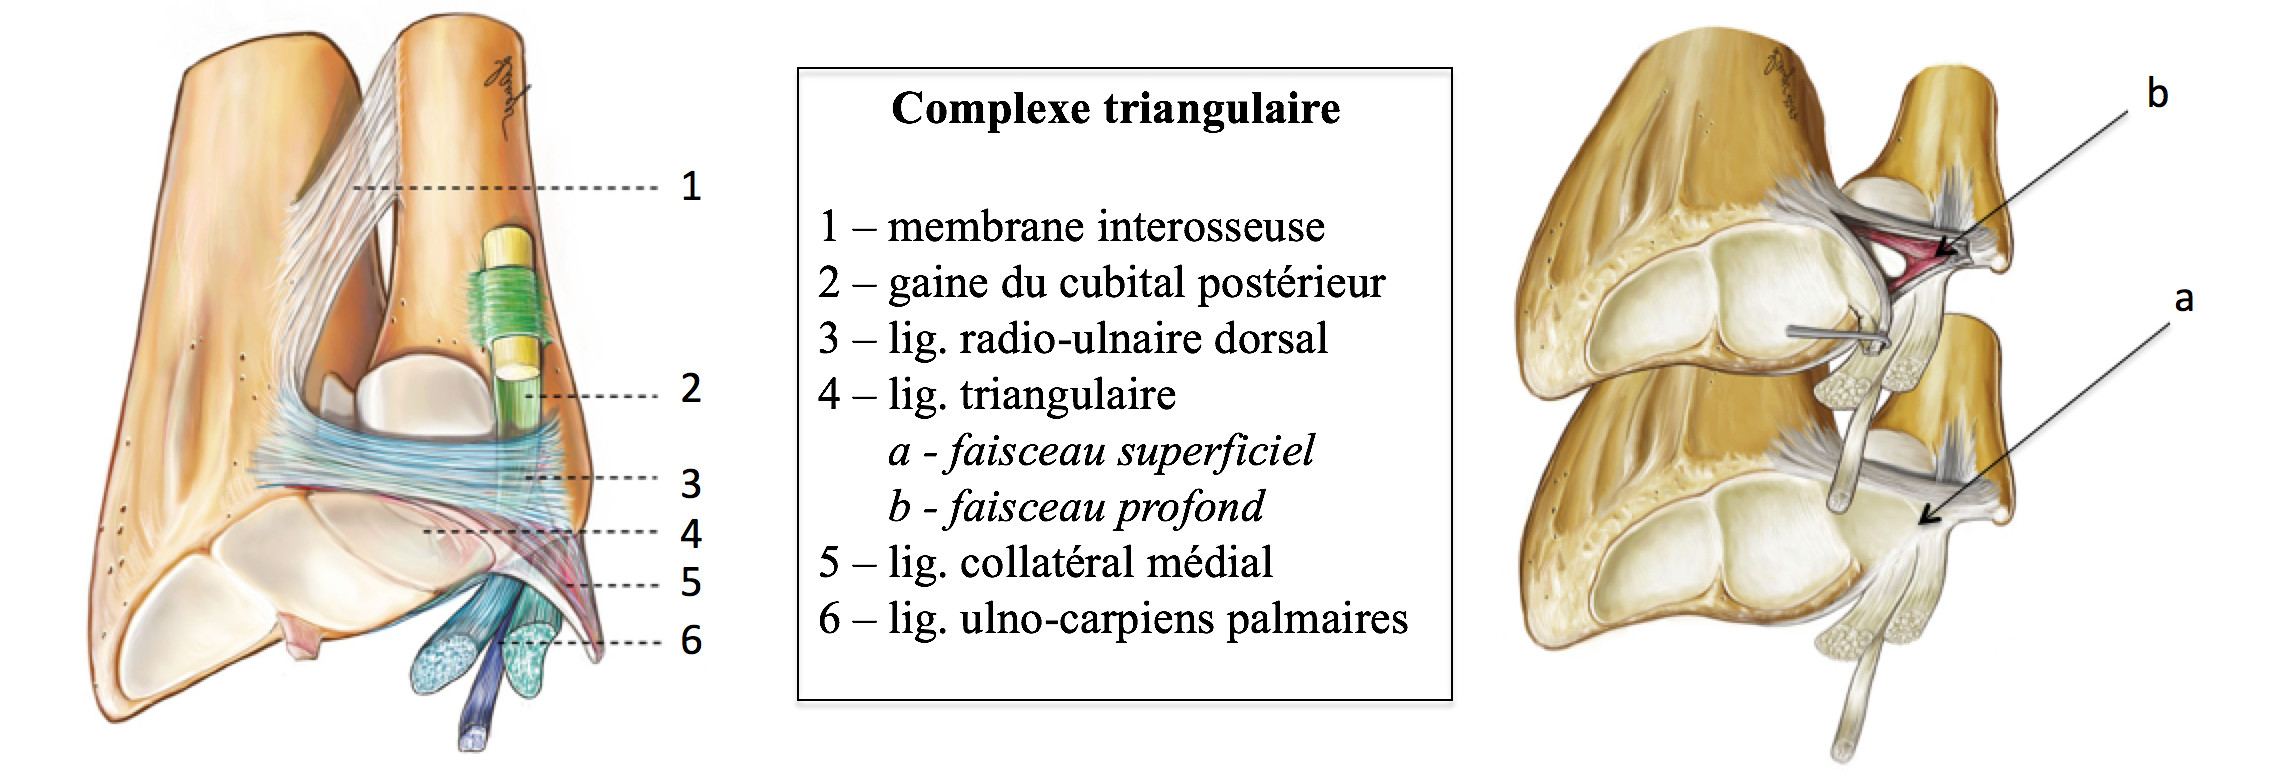 Complexe triangulaire du carpe